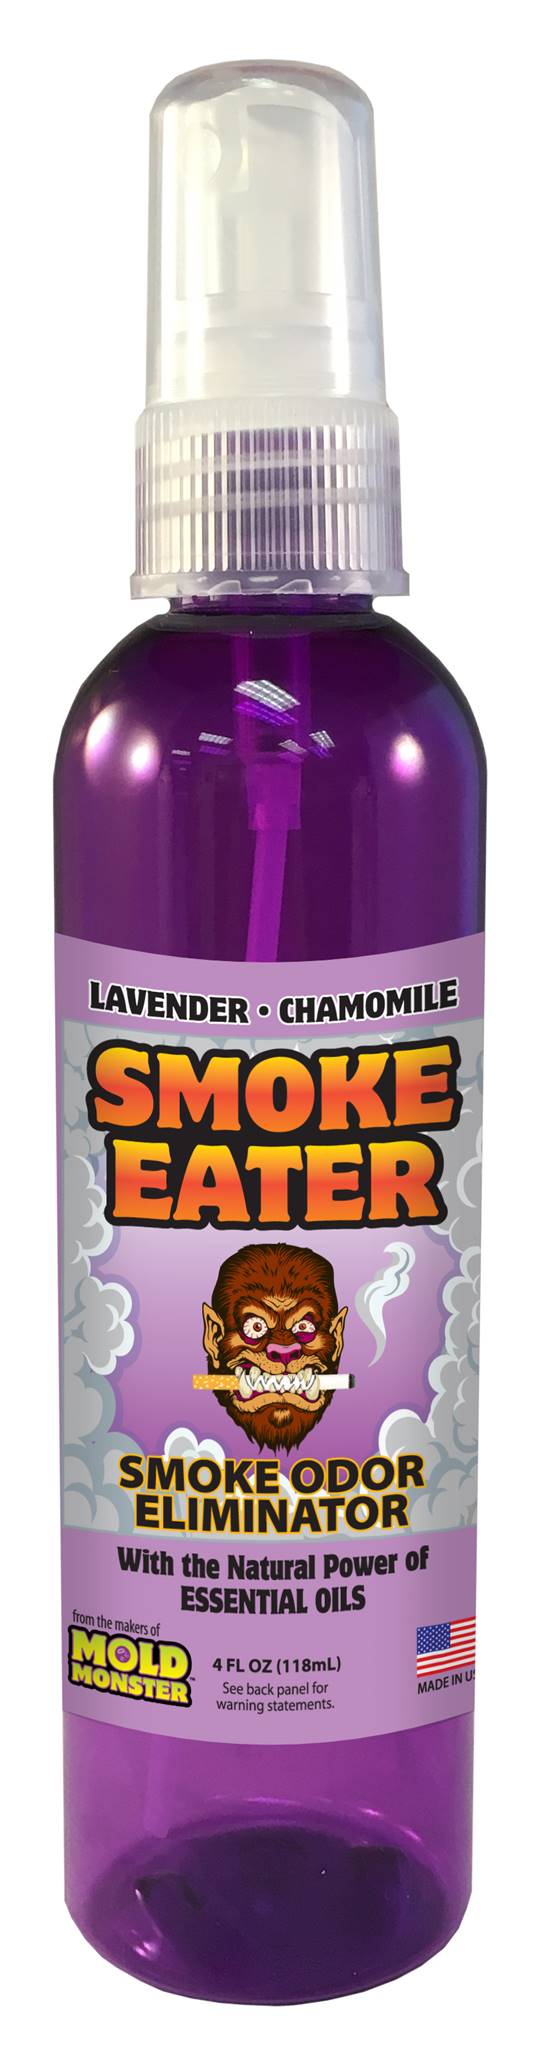 Smoke Eater - Lavender Chamomile, 4 oz.